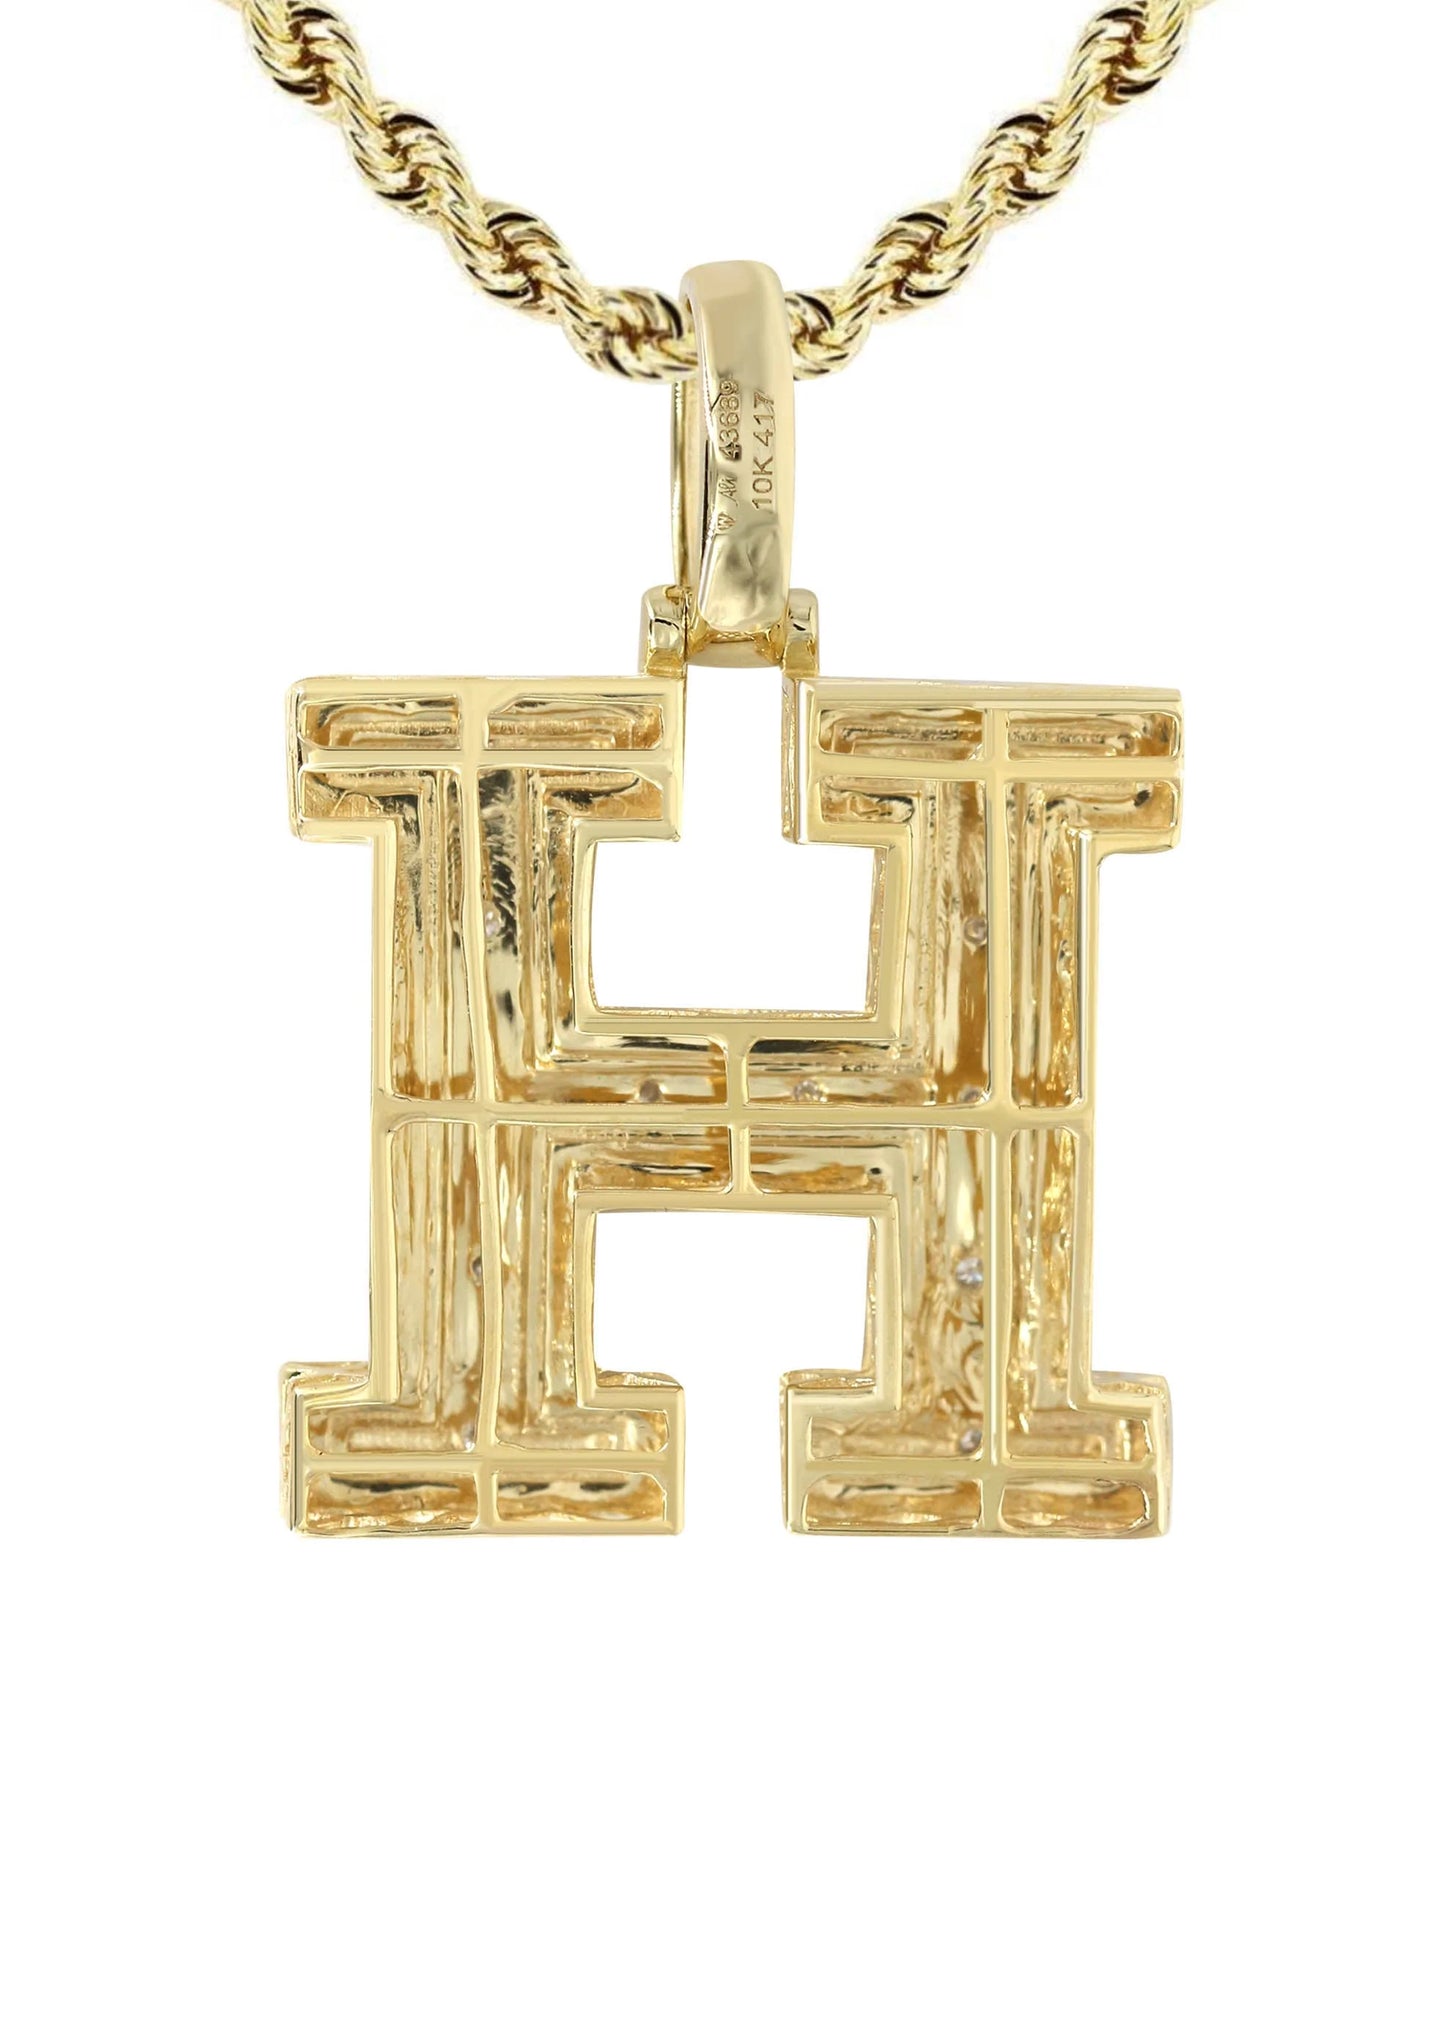 10k Yellow Gold Diamond Pendant Letter "H"